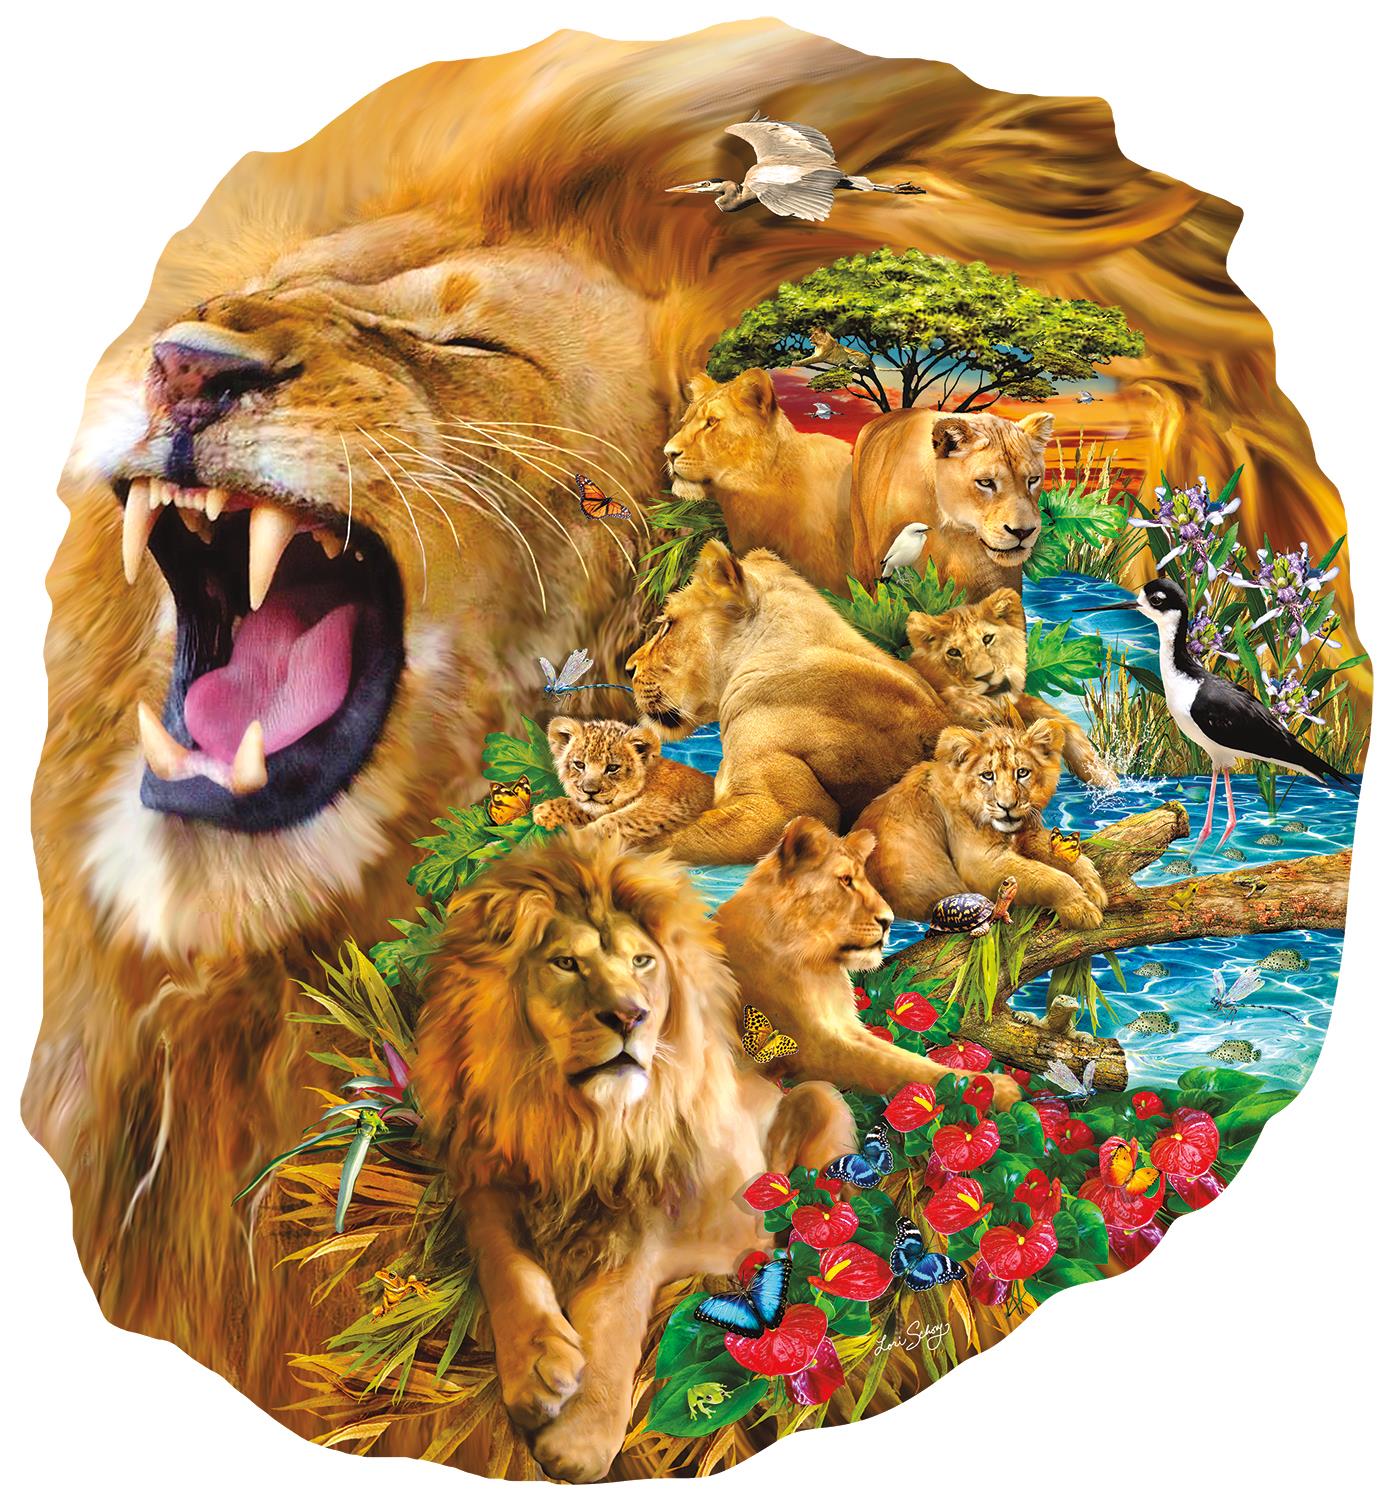 Sunsout Lion Family - Lori Schory Shaped Jigsaw Puzzle (600 Pieces)